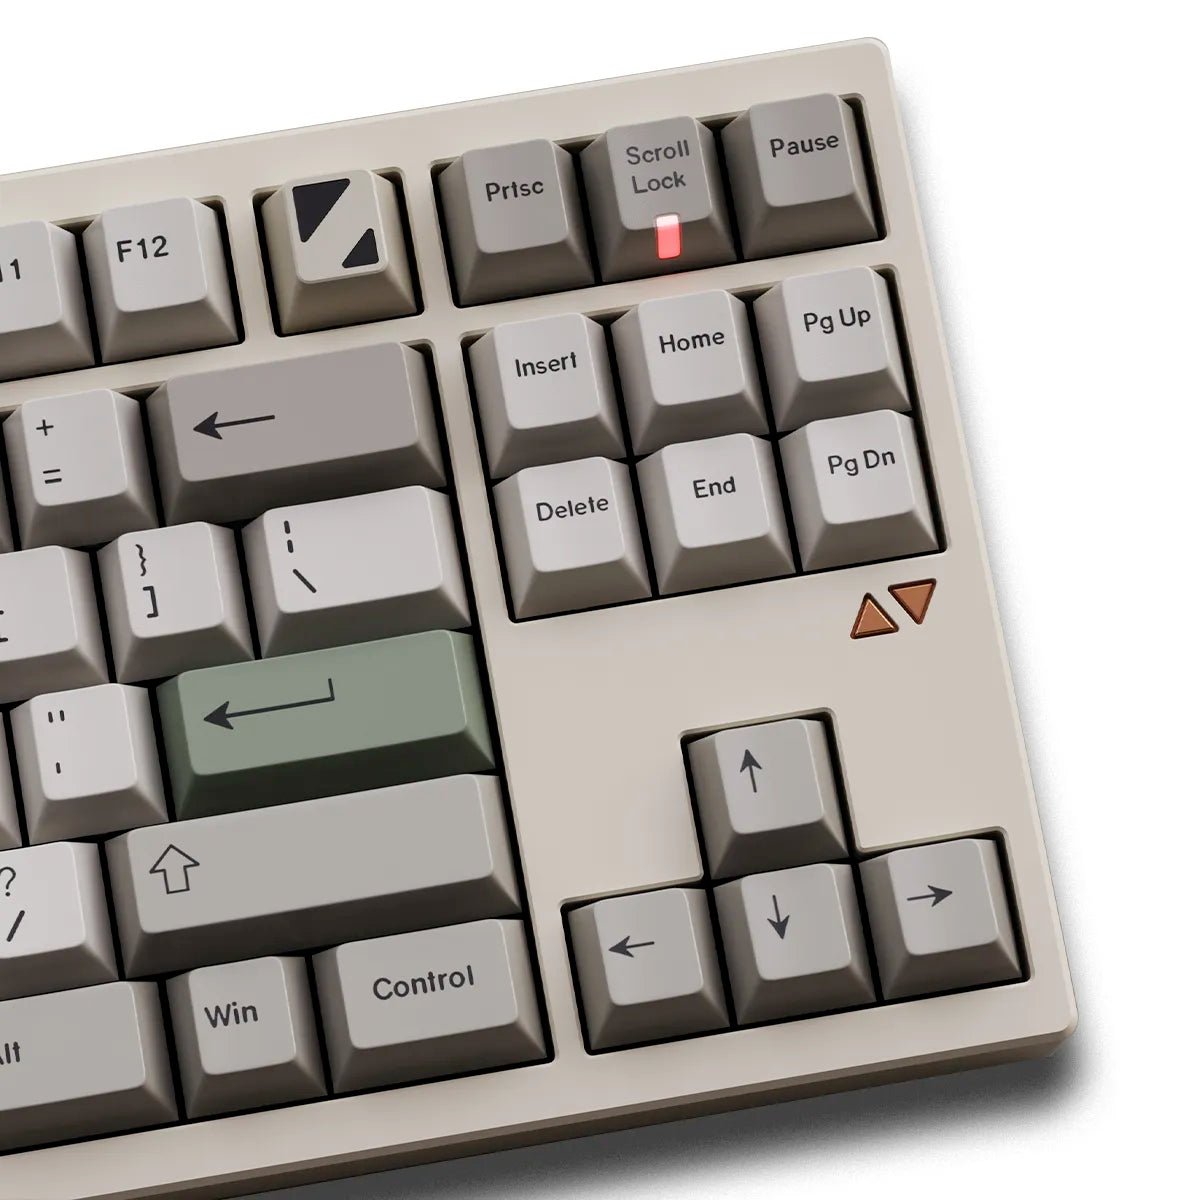 Luminkey80 TKL Keyboard - Divinikey